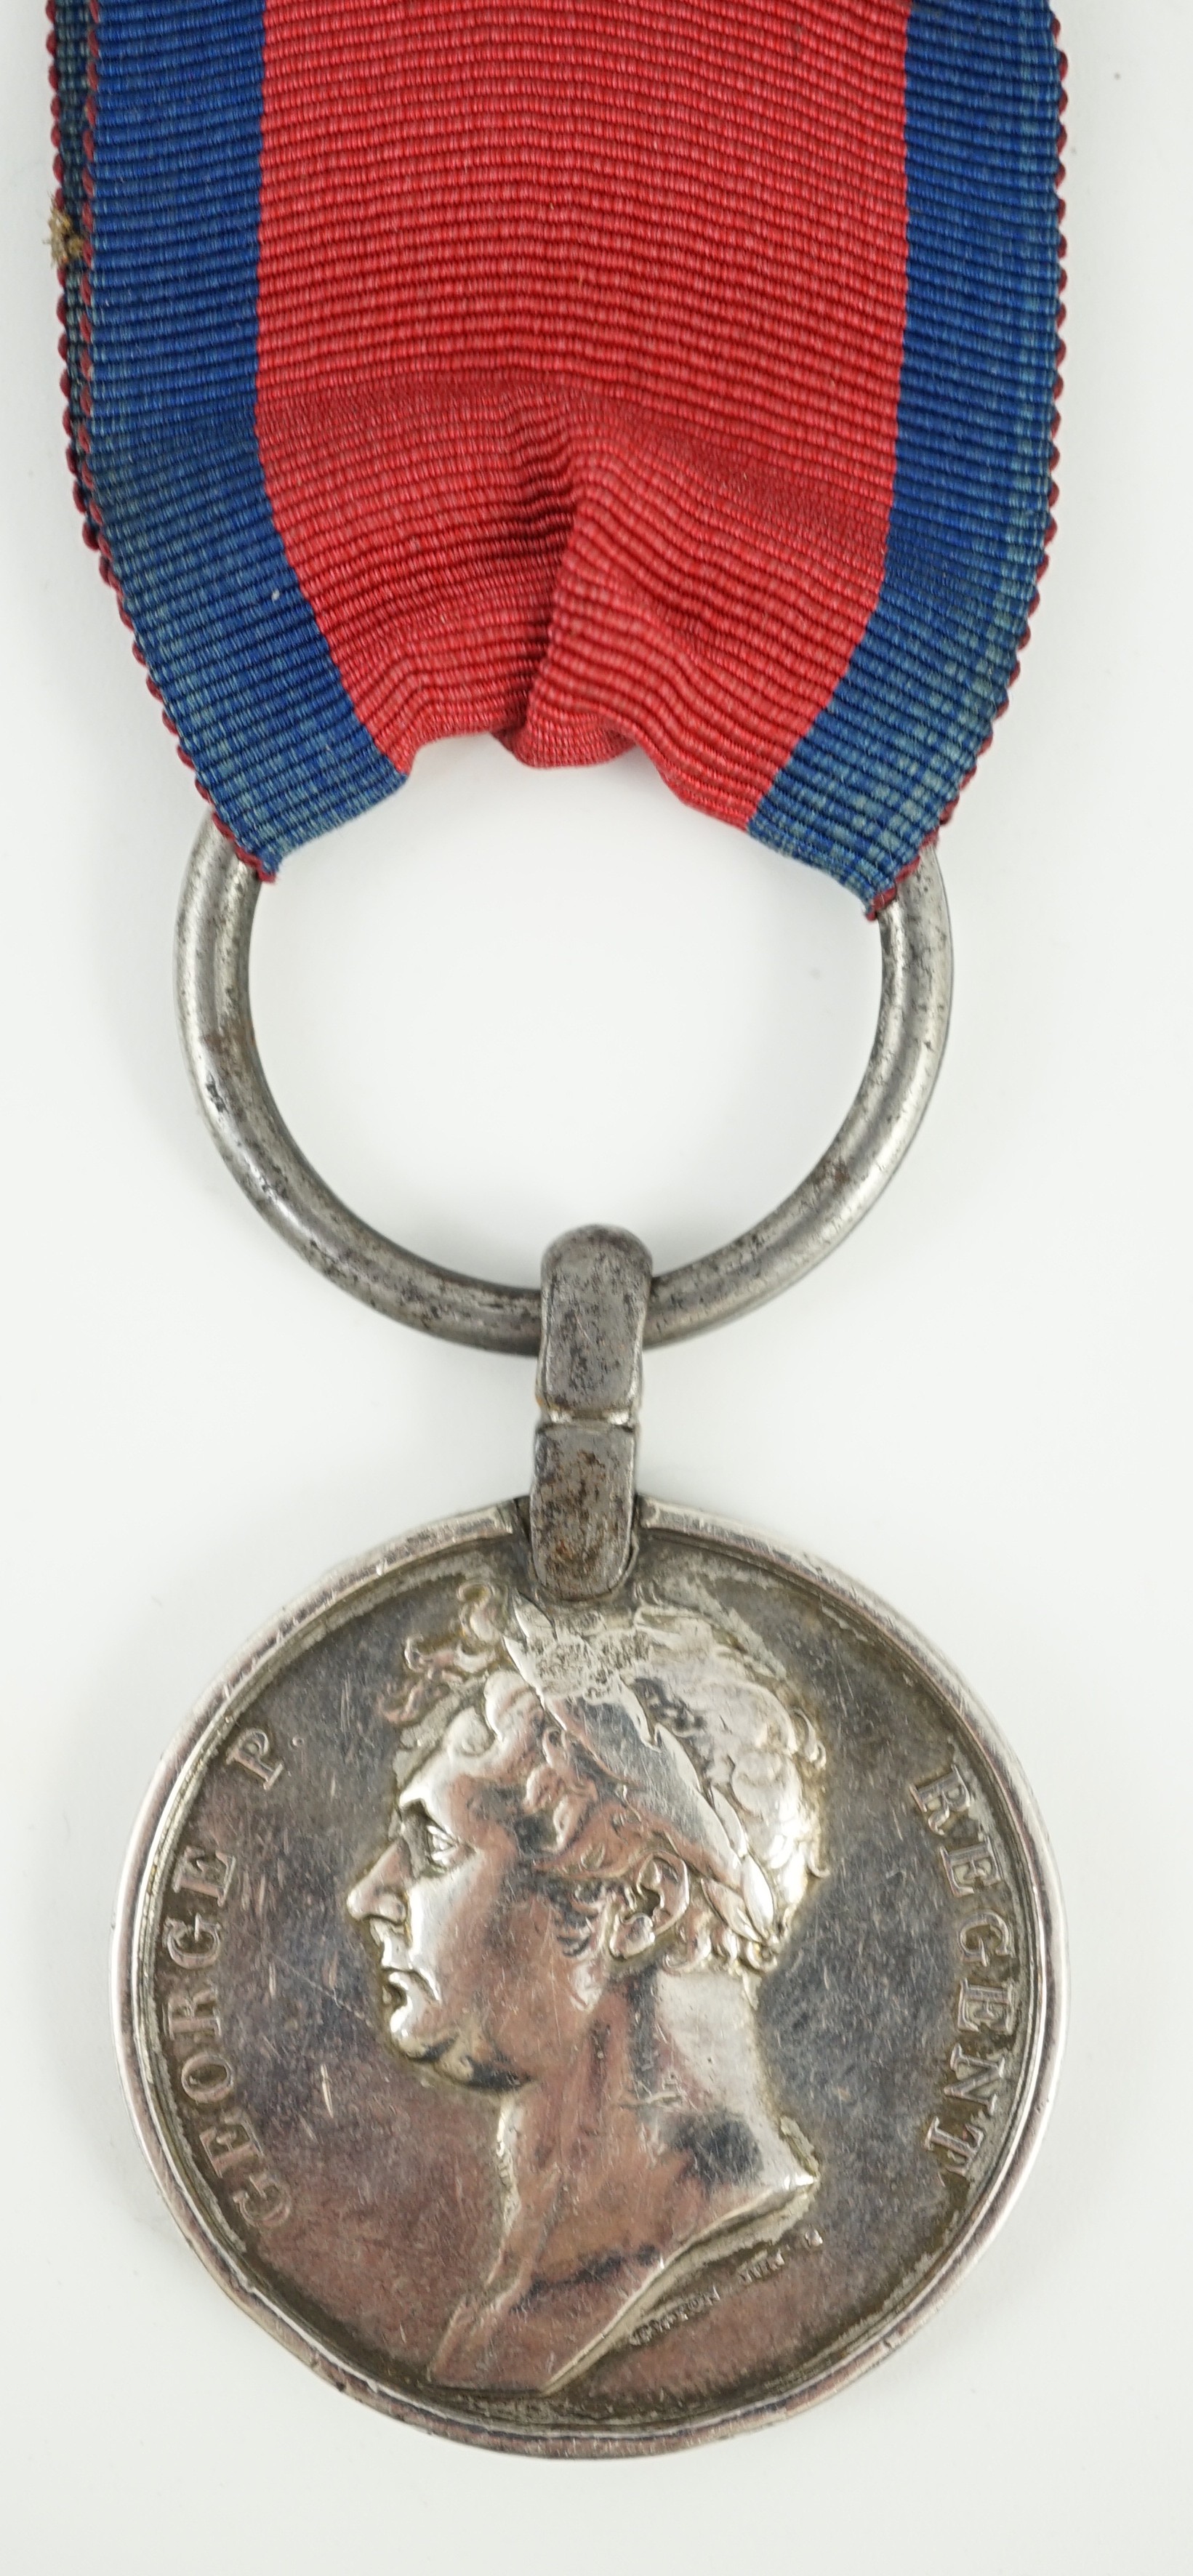 British campaign medals, Waterloo medal impressed Henry Weber 2nd Batt. 59th Reg. Foot